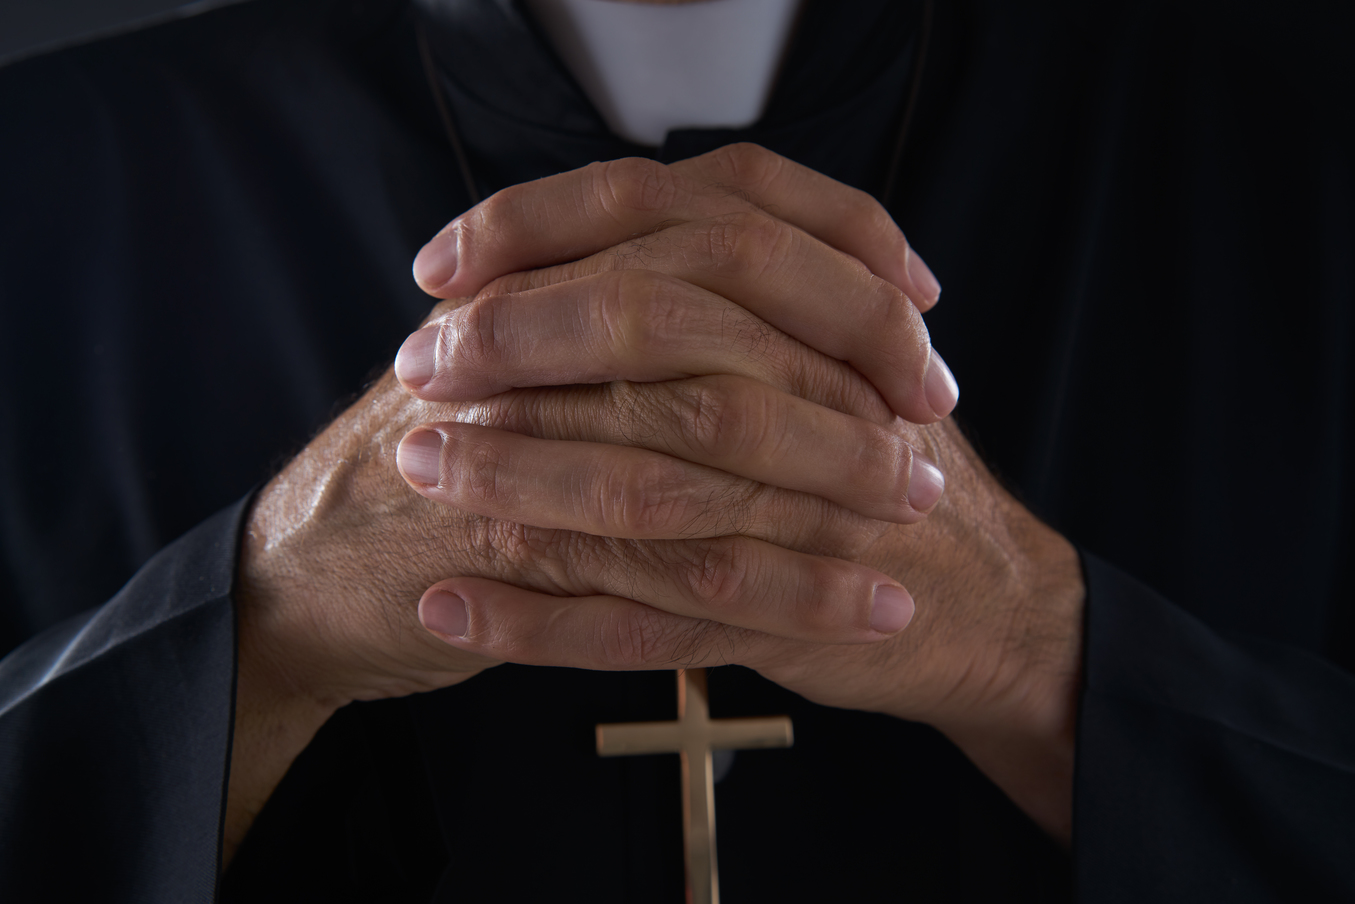 Casos de abuso sexual cometidos por sacerdotes no deben quedar impunes, sentenció Cecodap